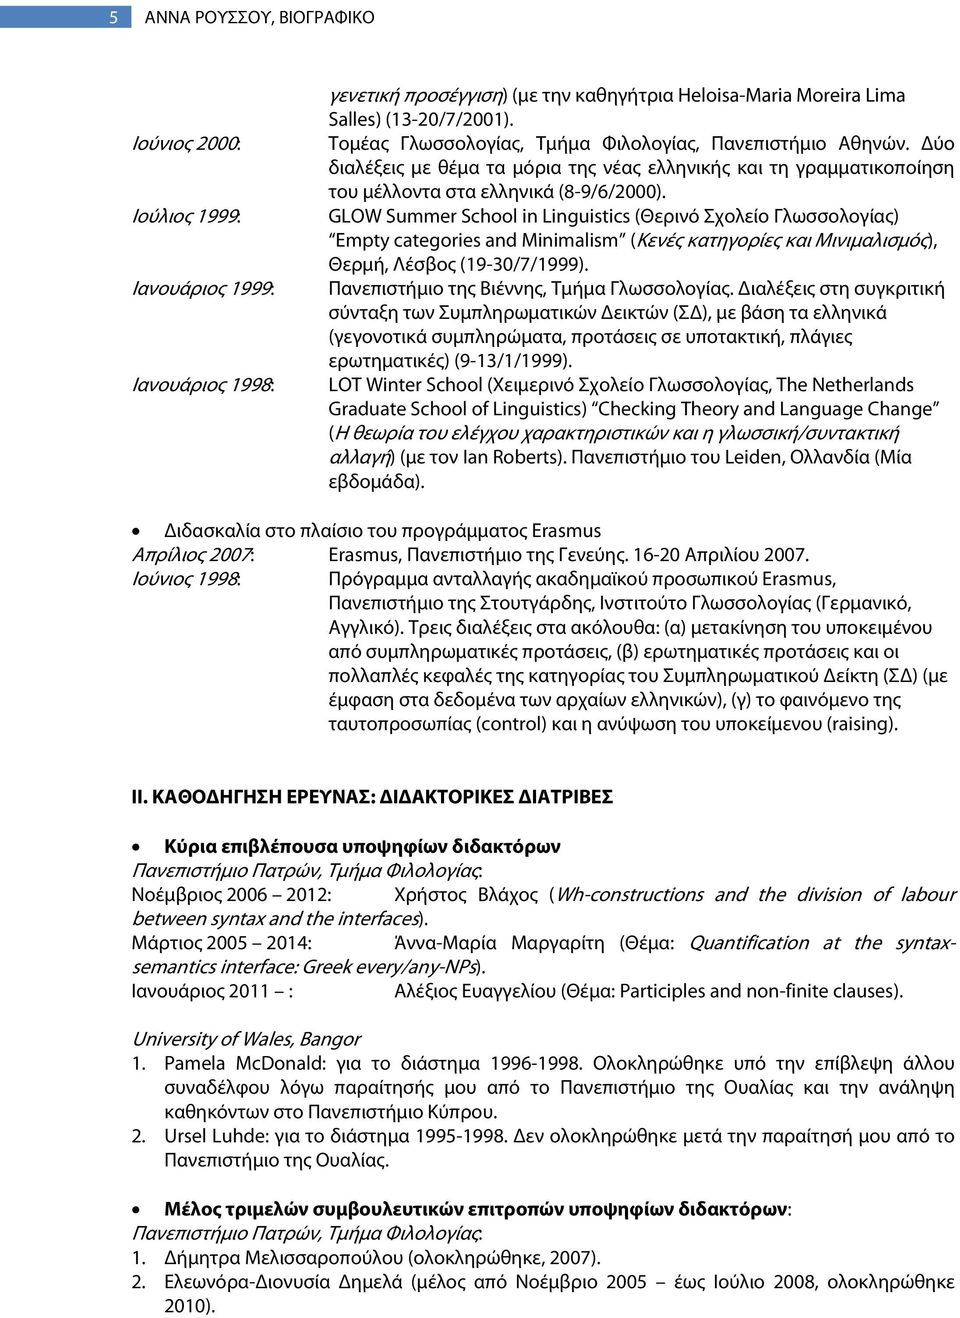 GLOW Summer School in Linguistics (Θερινό Σχολείο Γλωσσολογίας) Empty categories and Minimalism (Κενές κατηγορίες και Μινιμαλισμός), Θερμή, Λέσβος (19-30/7/1999).